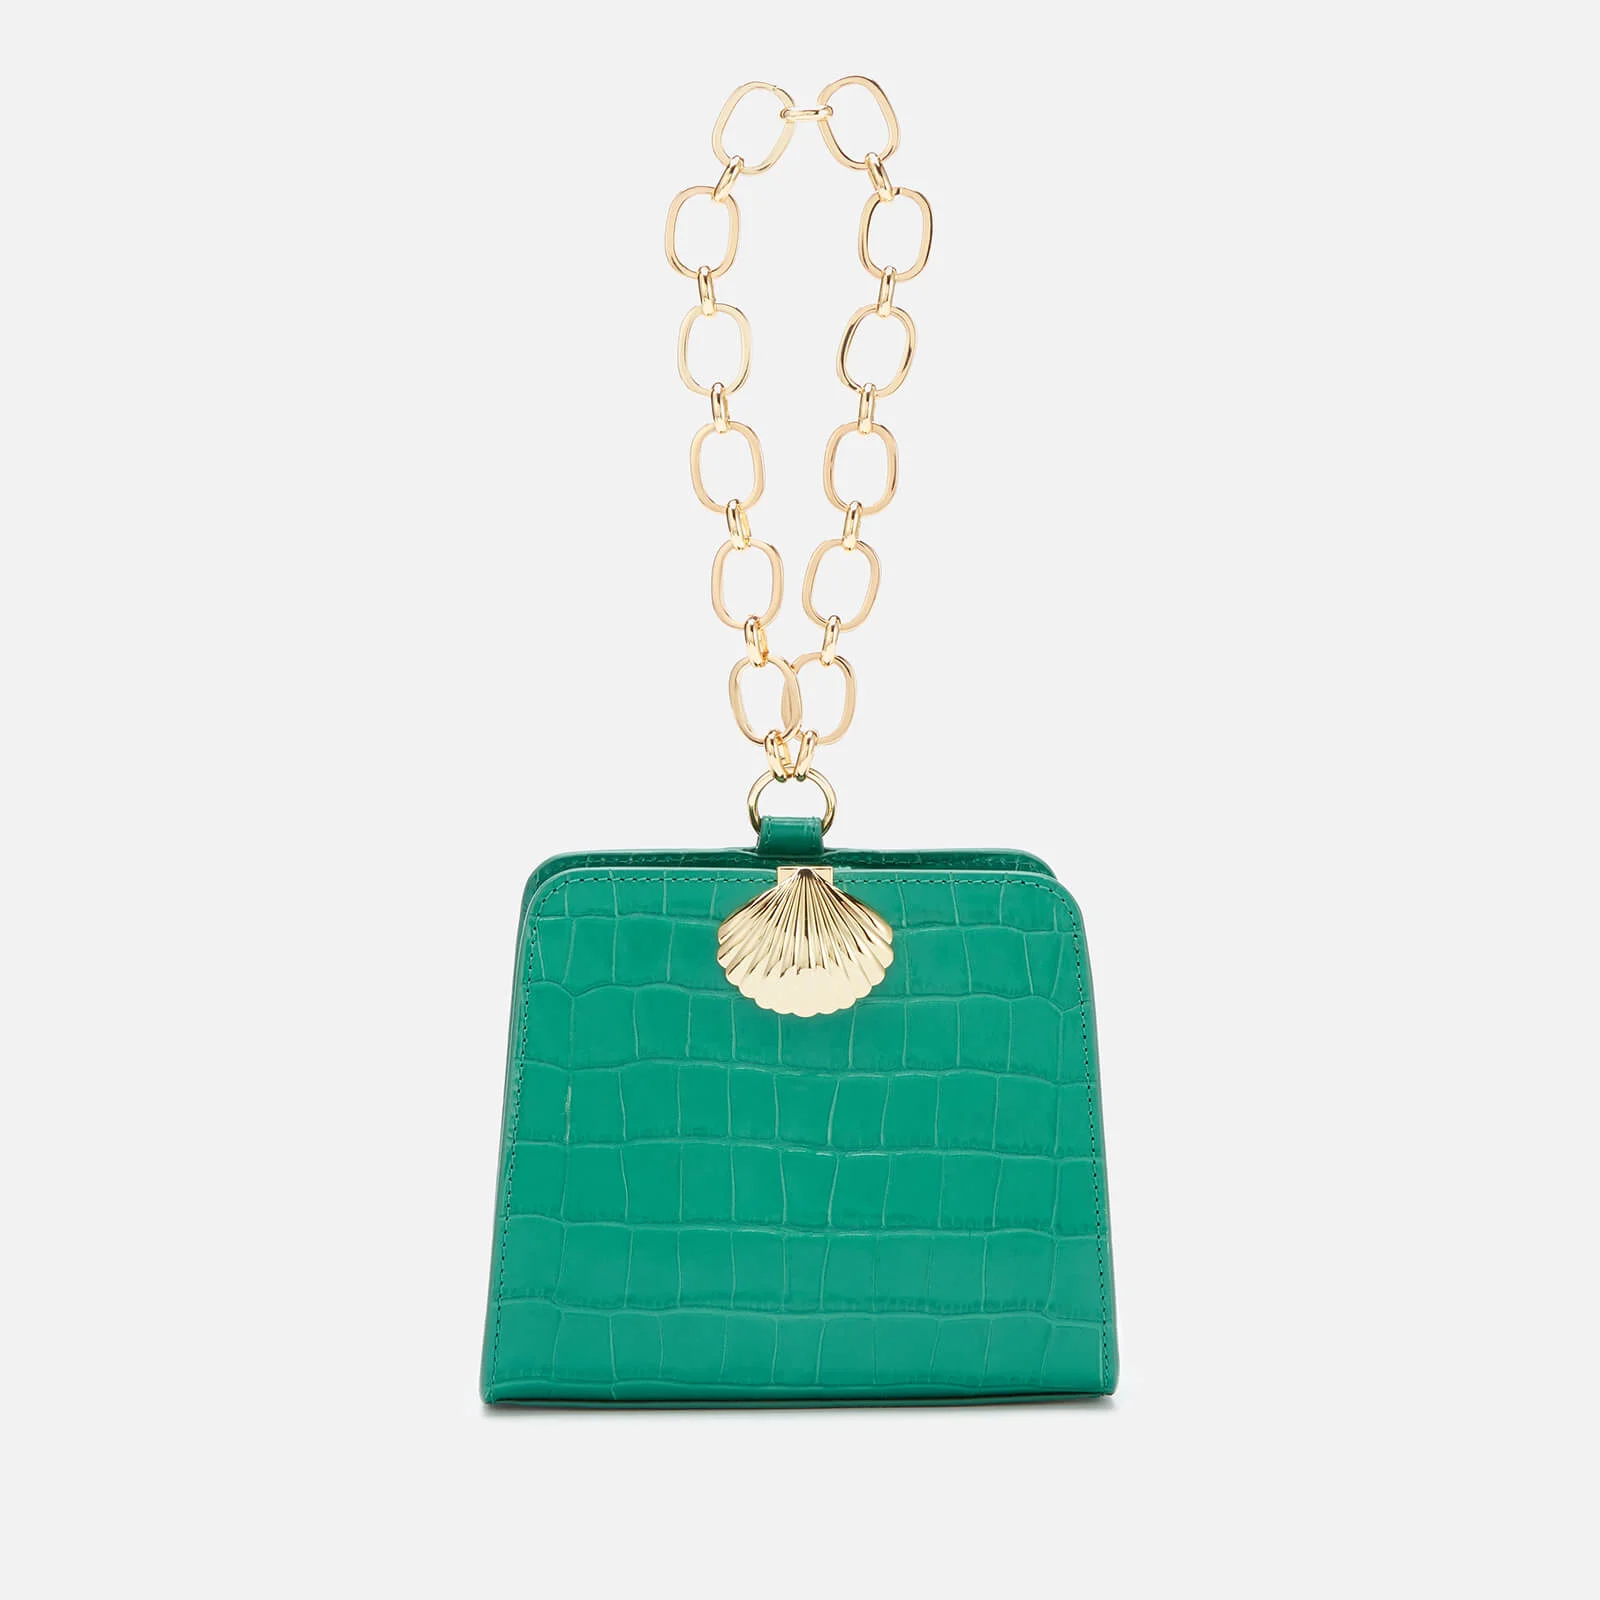 RIXO Women's Amelie Croc Bag - Emerald Image 1